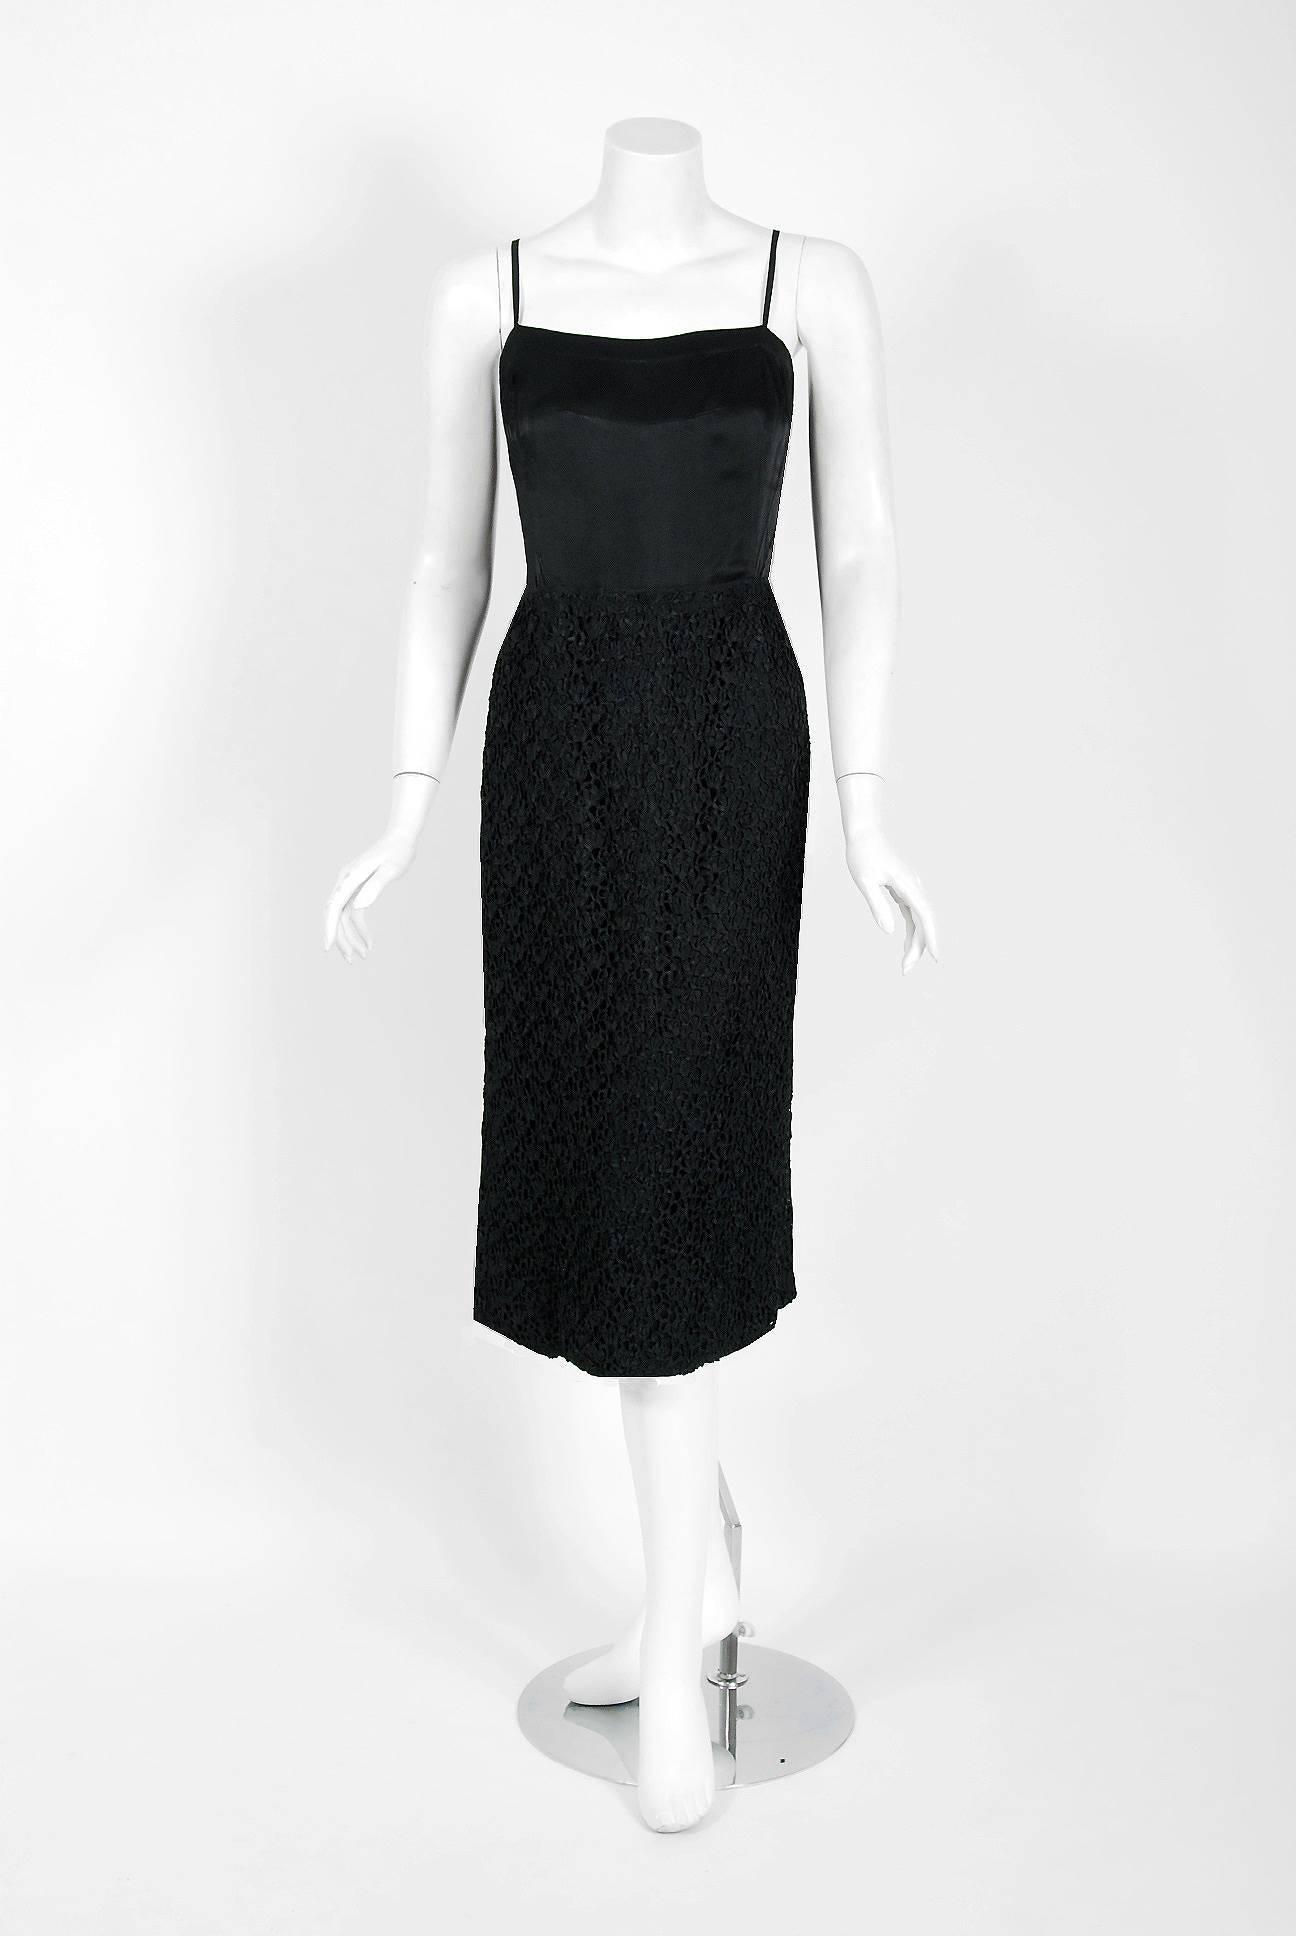 long sleeve black chanel dress